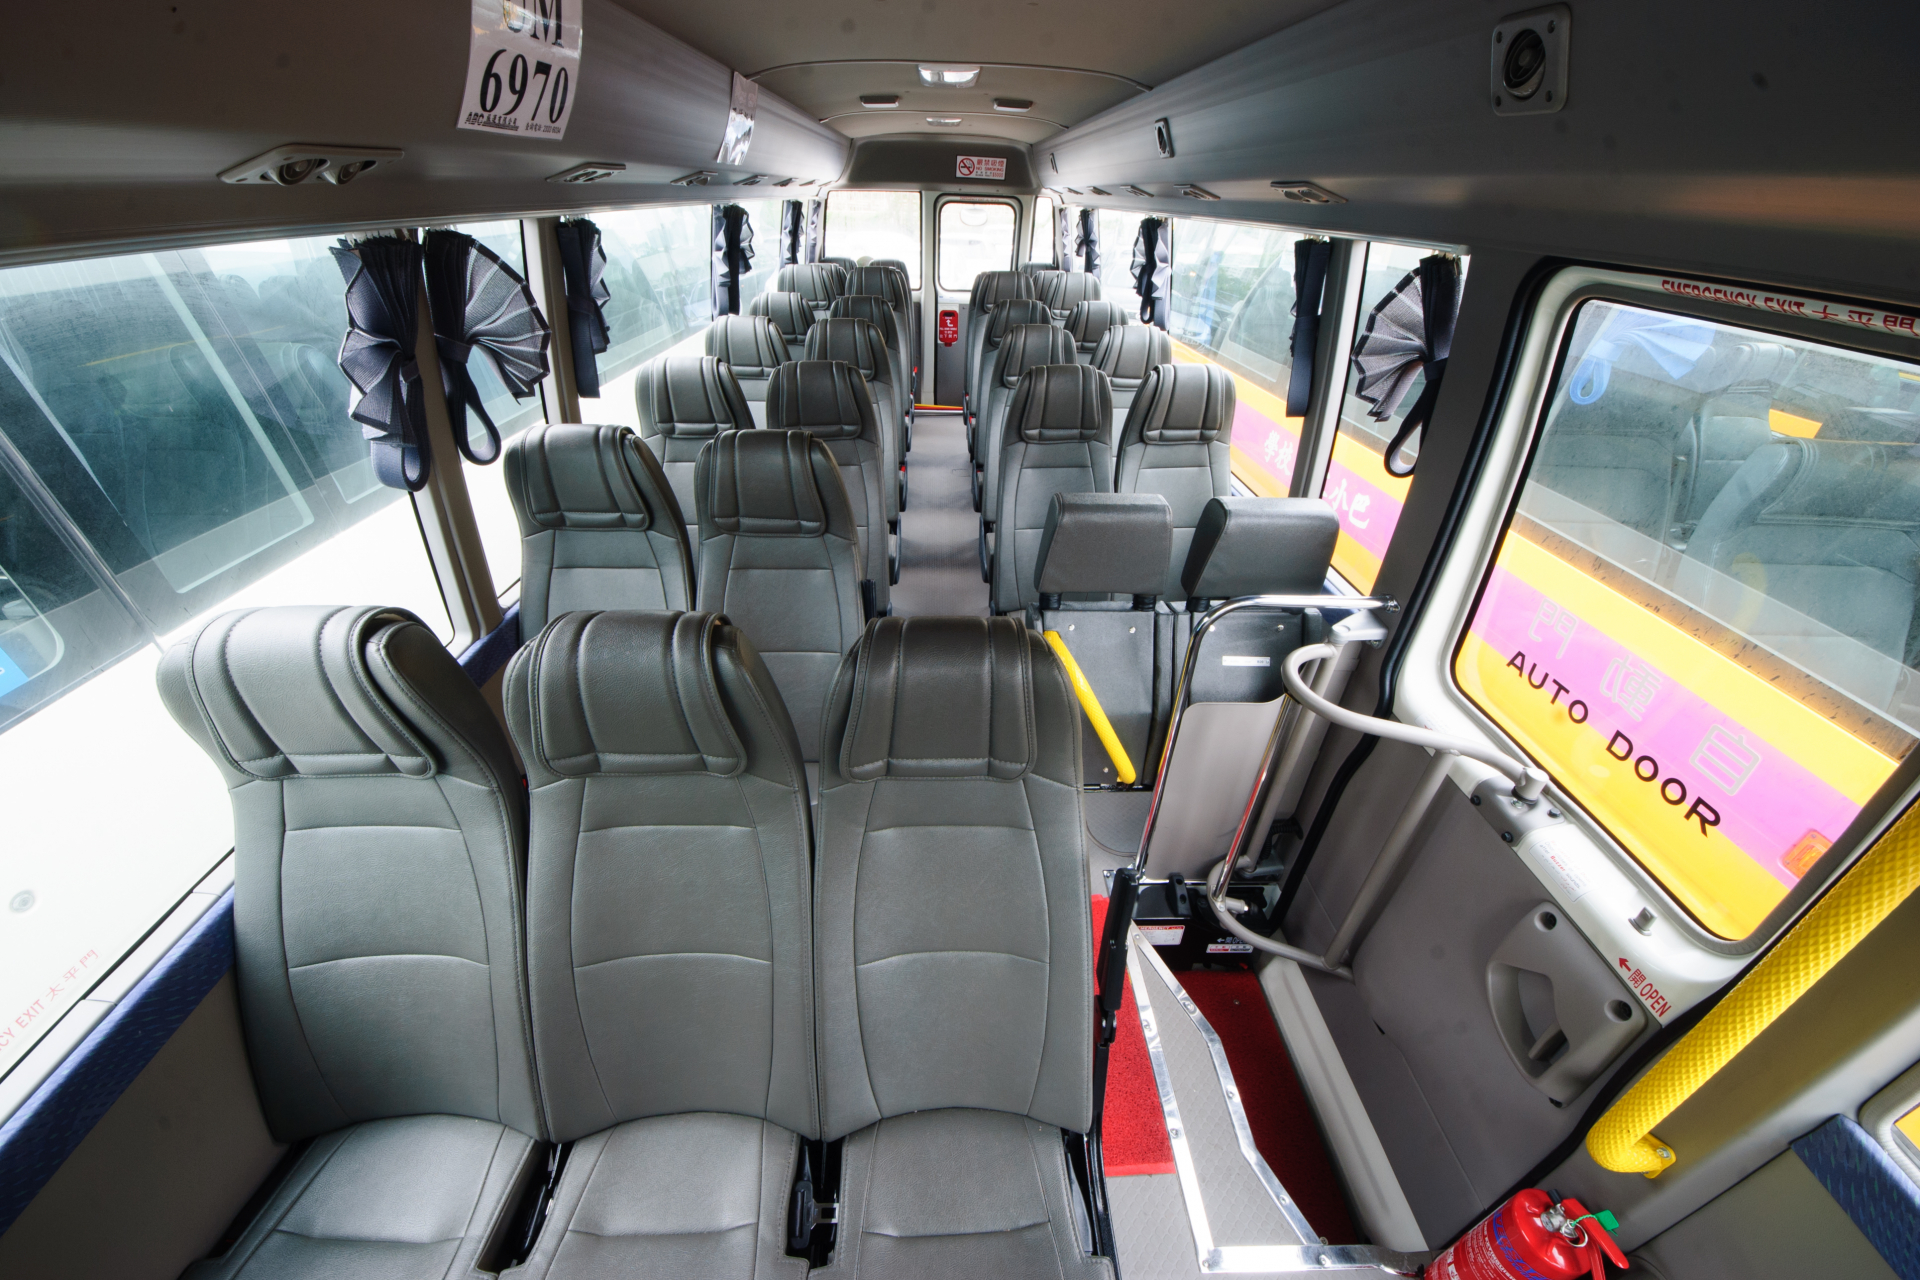 28 Seats TOYOTA - LG8325, UT3031
Coach Bus /
New Territories, Hong Kong

 / Hourly (Wedding) HKD 470.00
 / Hourly HKD 470.00
